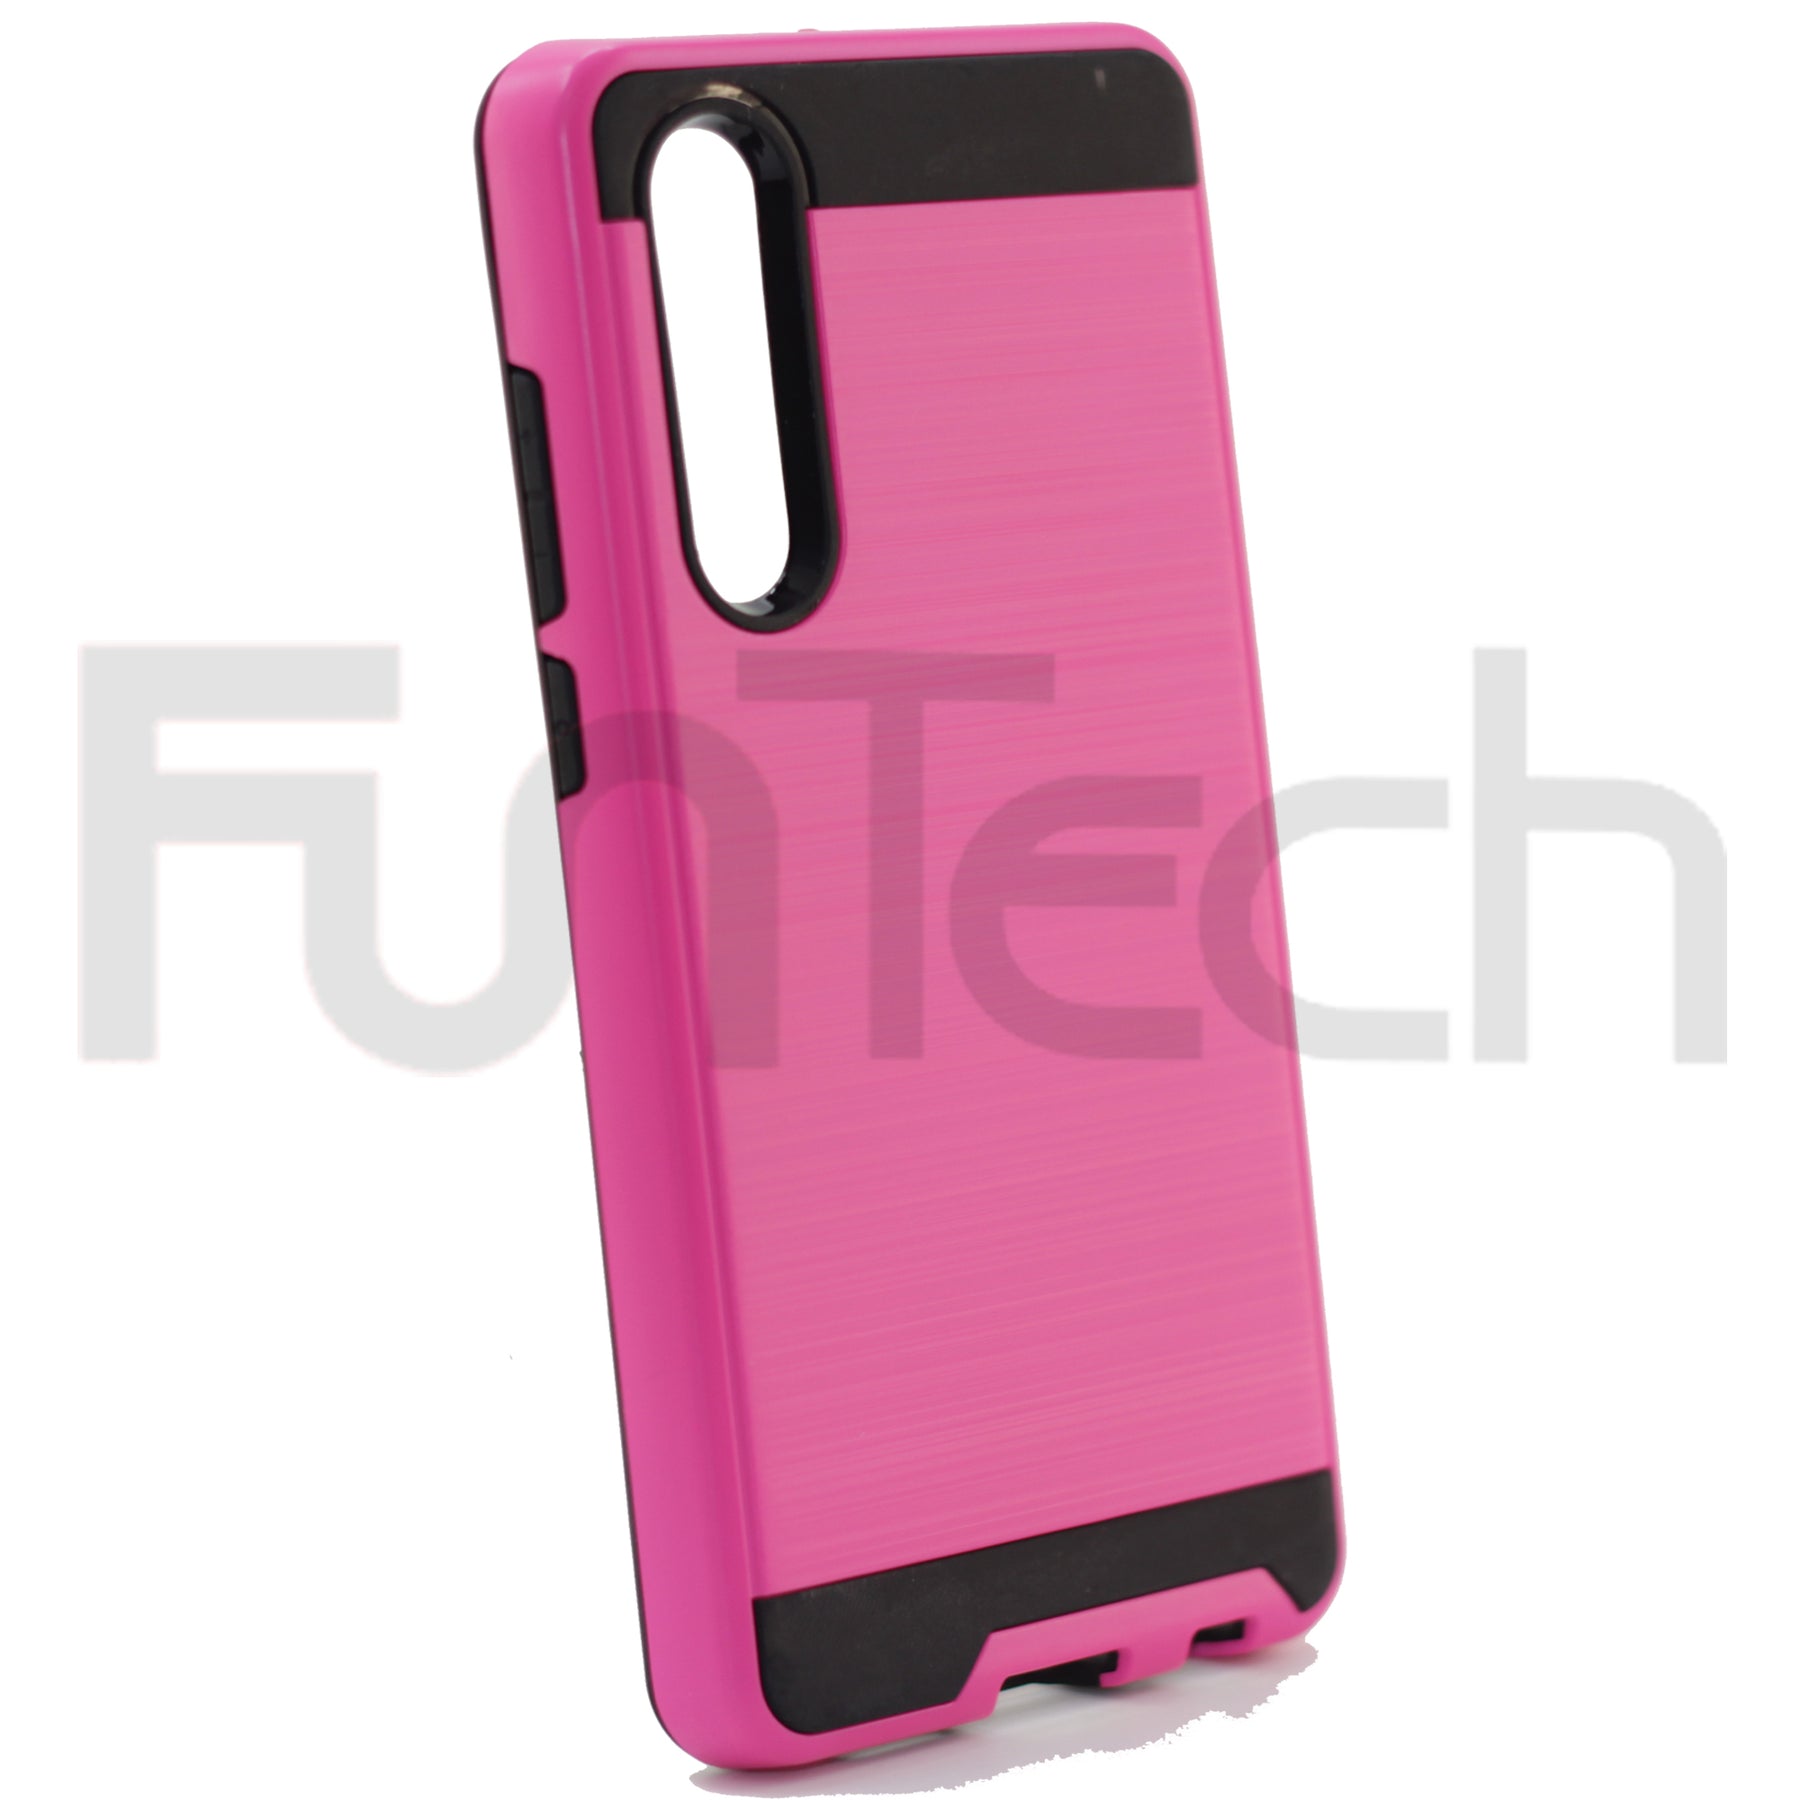 Huawei P30, Slim Armor Case, Color Pink,